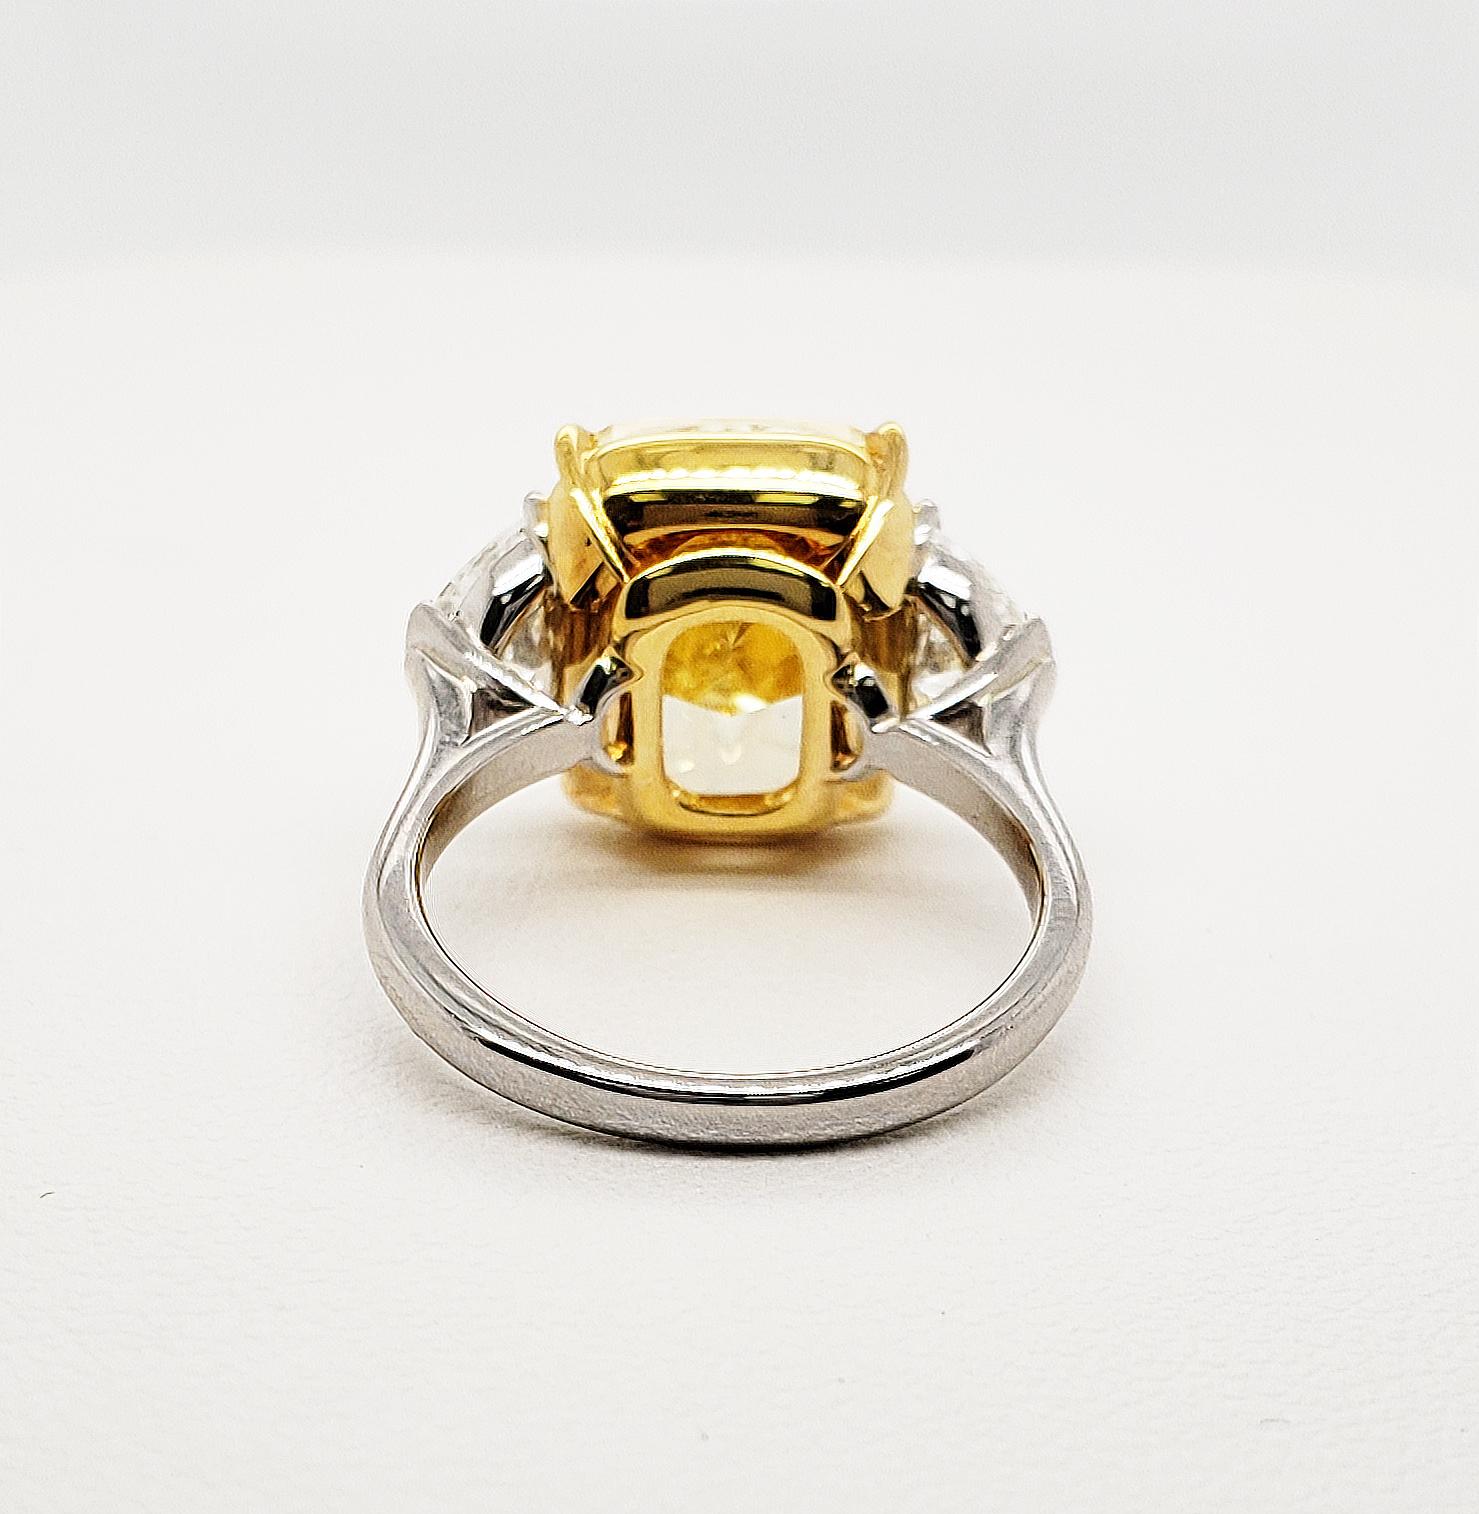 Contemporary 10 Carat Fancy Intense Yellow Diamond Ring GIA Certified